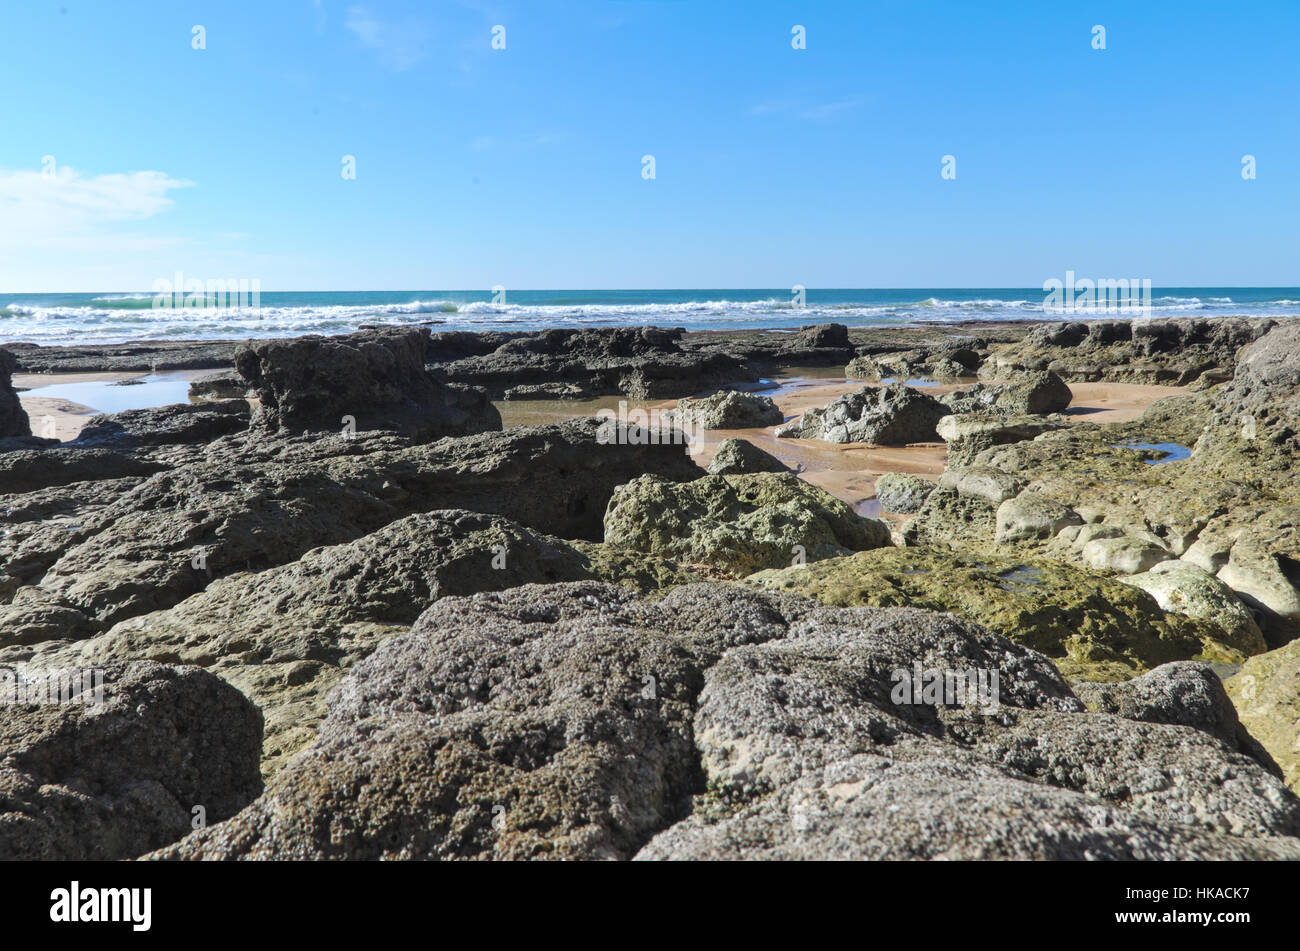 Beach scene in Gale beach. Albufeira, Algarve, Portugal Stock Photo